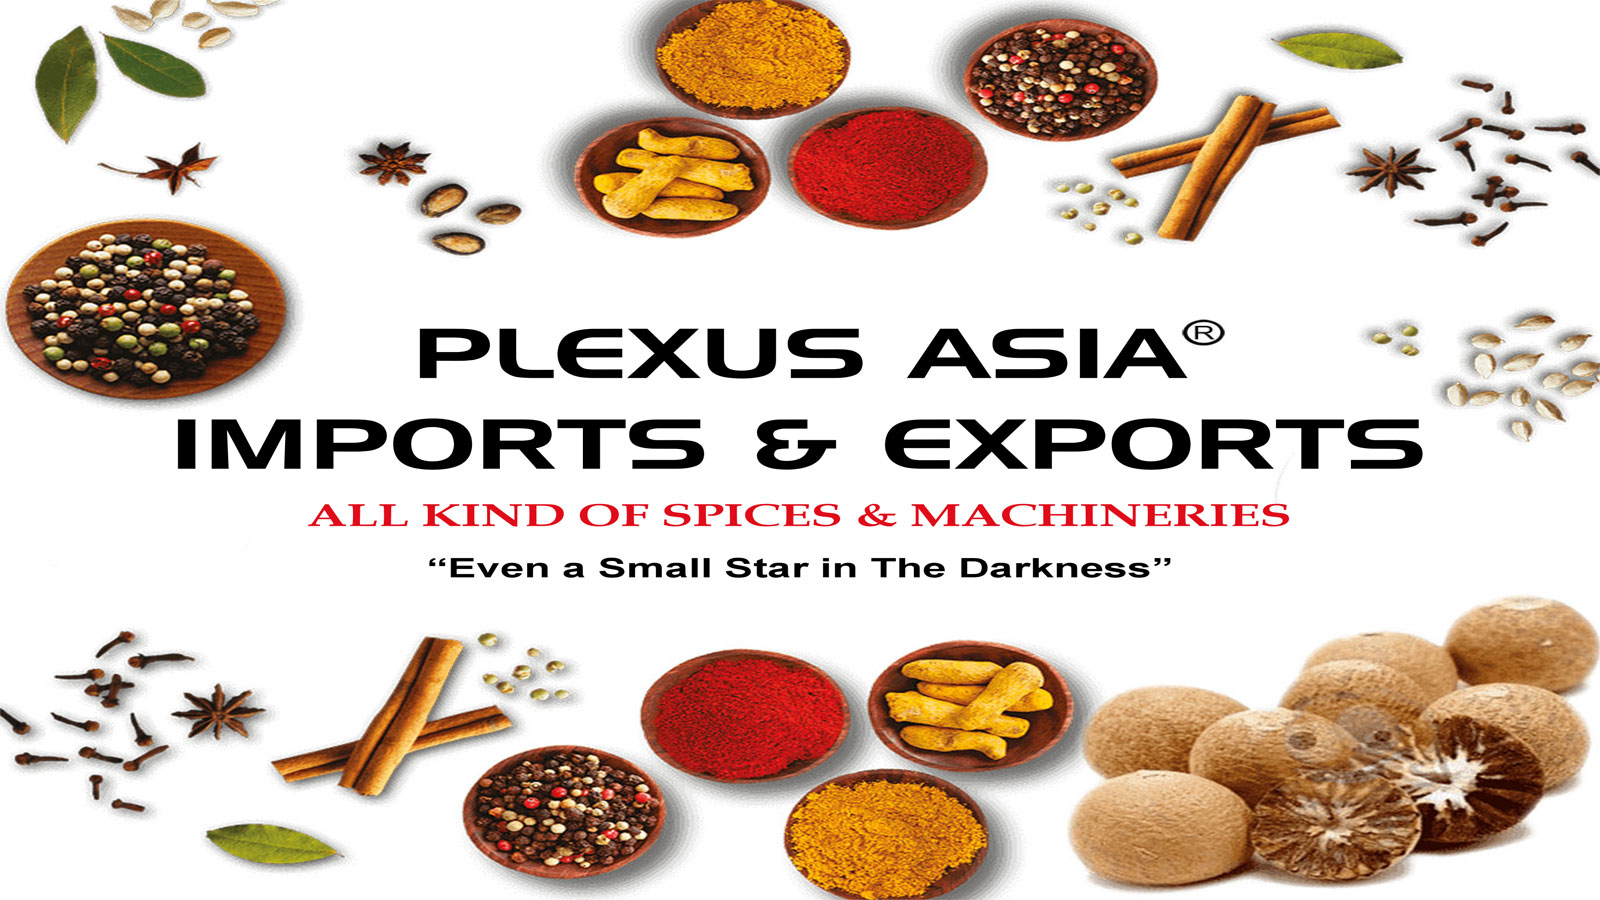 PLEXUS ASIA IMPORTS & EXPORTS